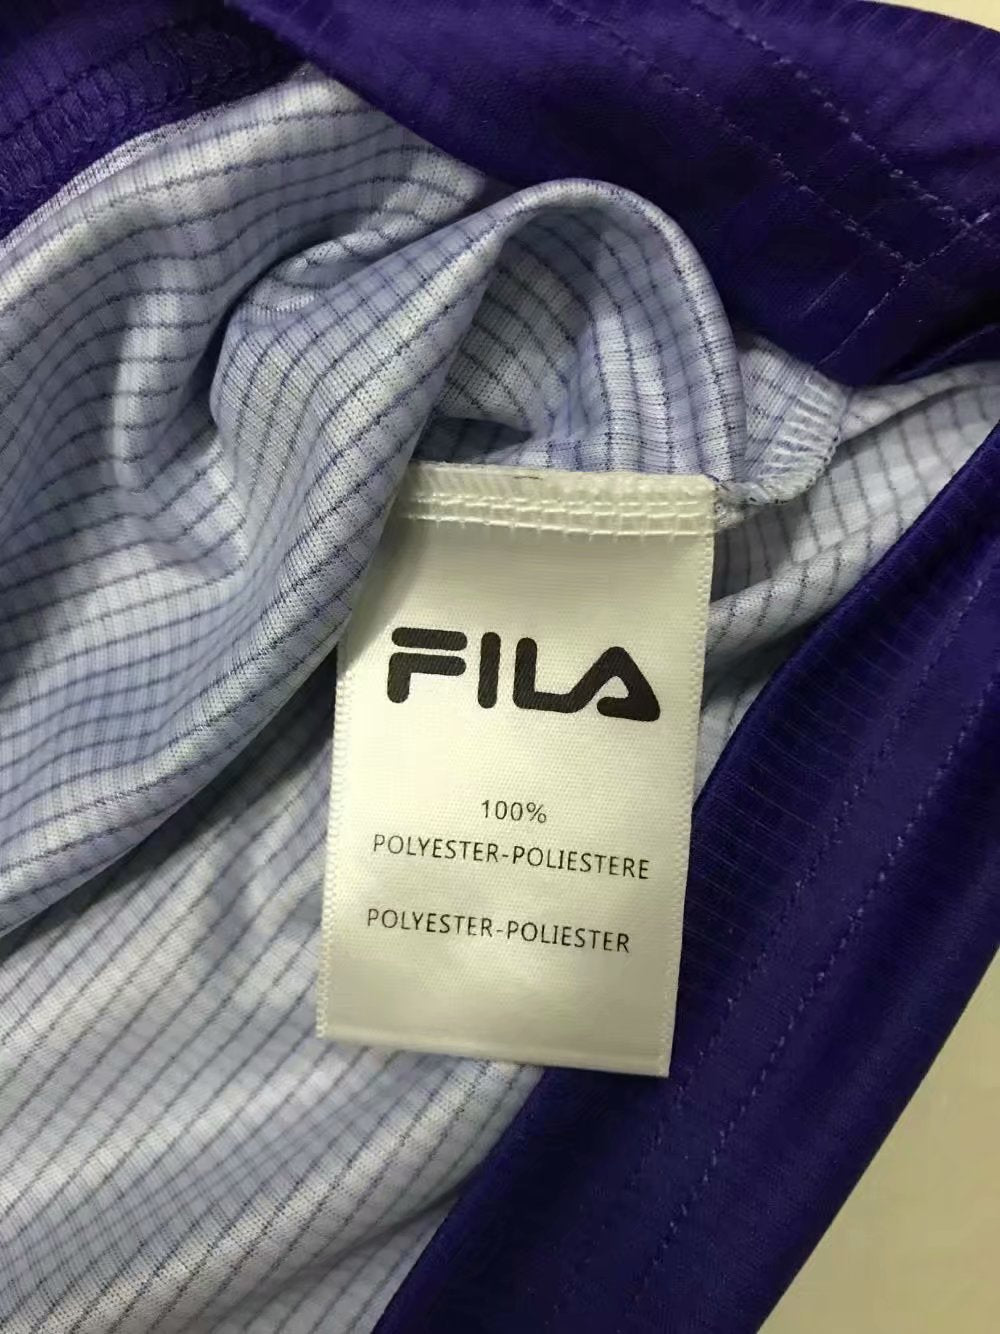 1998 Fiorentina Home Short Sleeve Shirt - That Retro Shirt Store